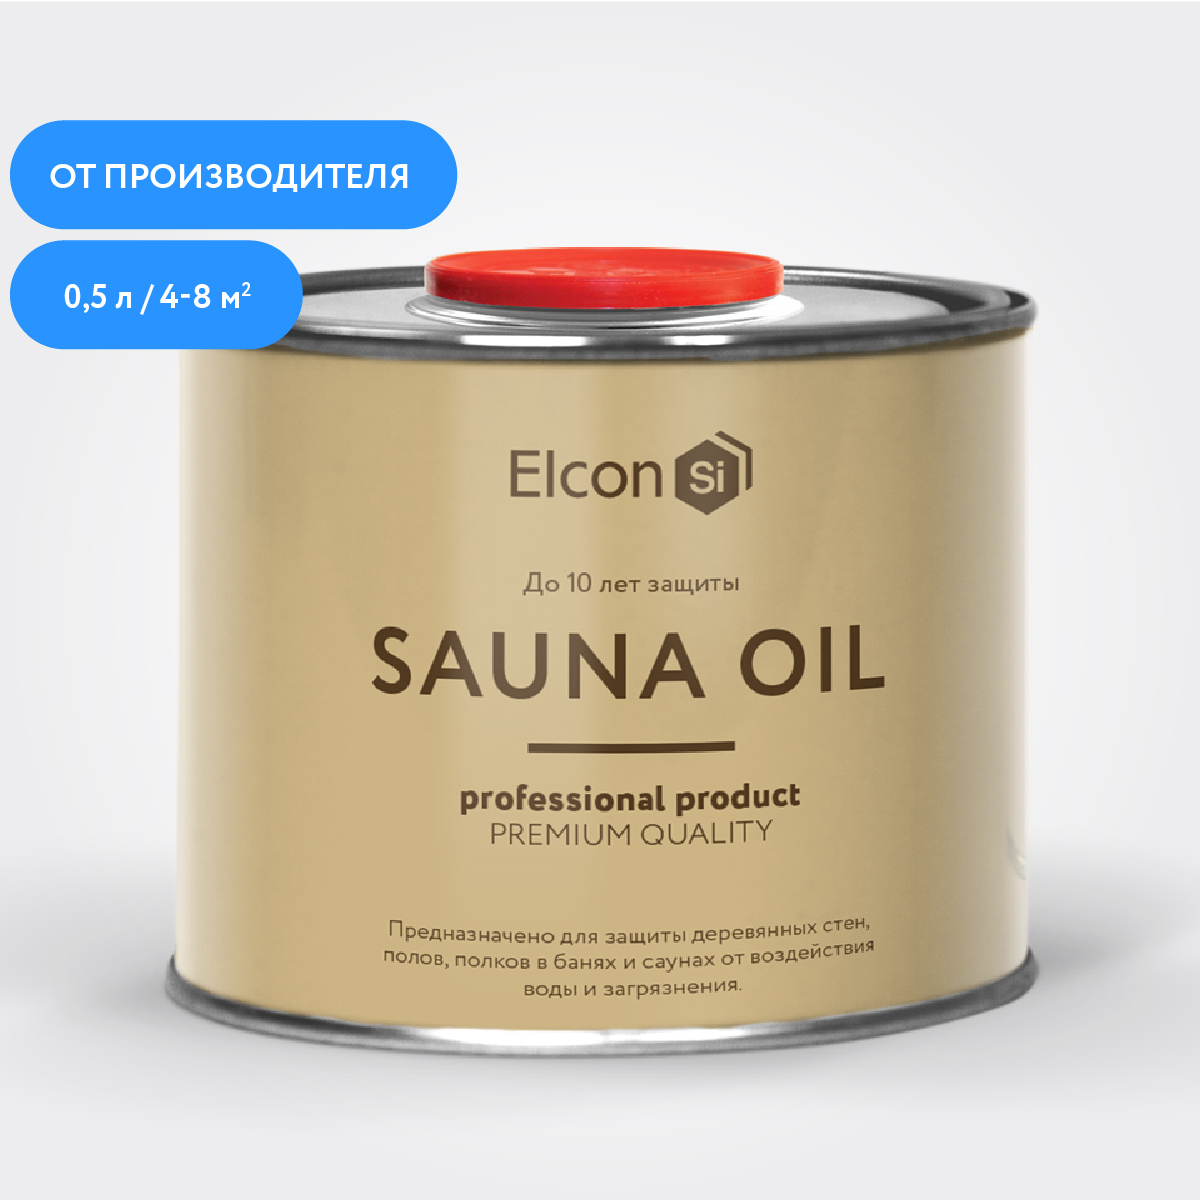 Elcon Sauna Oil